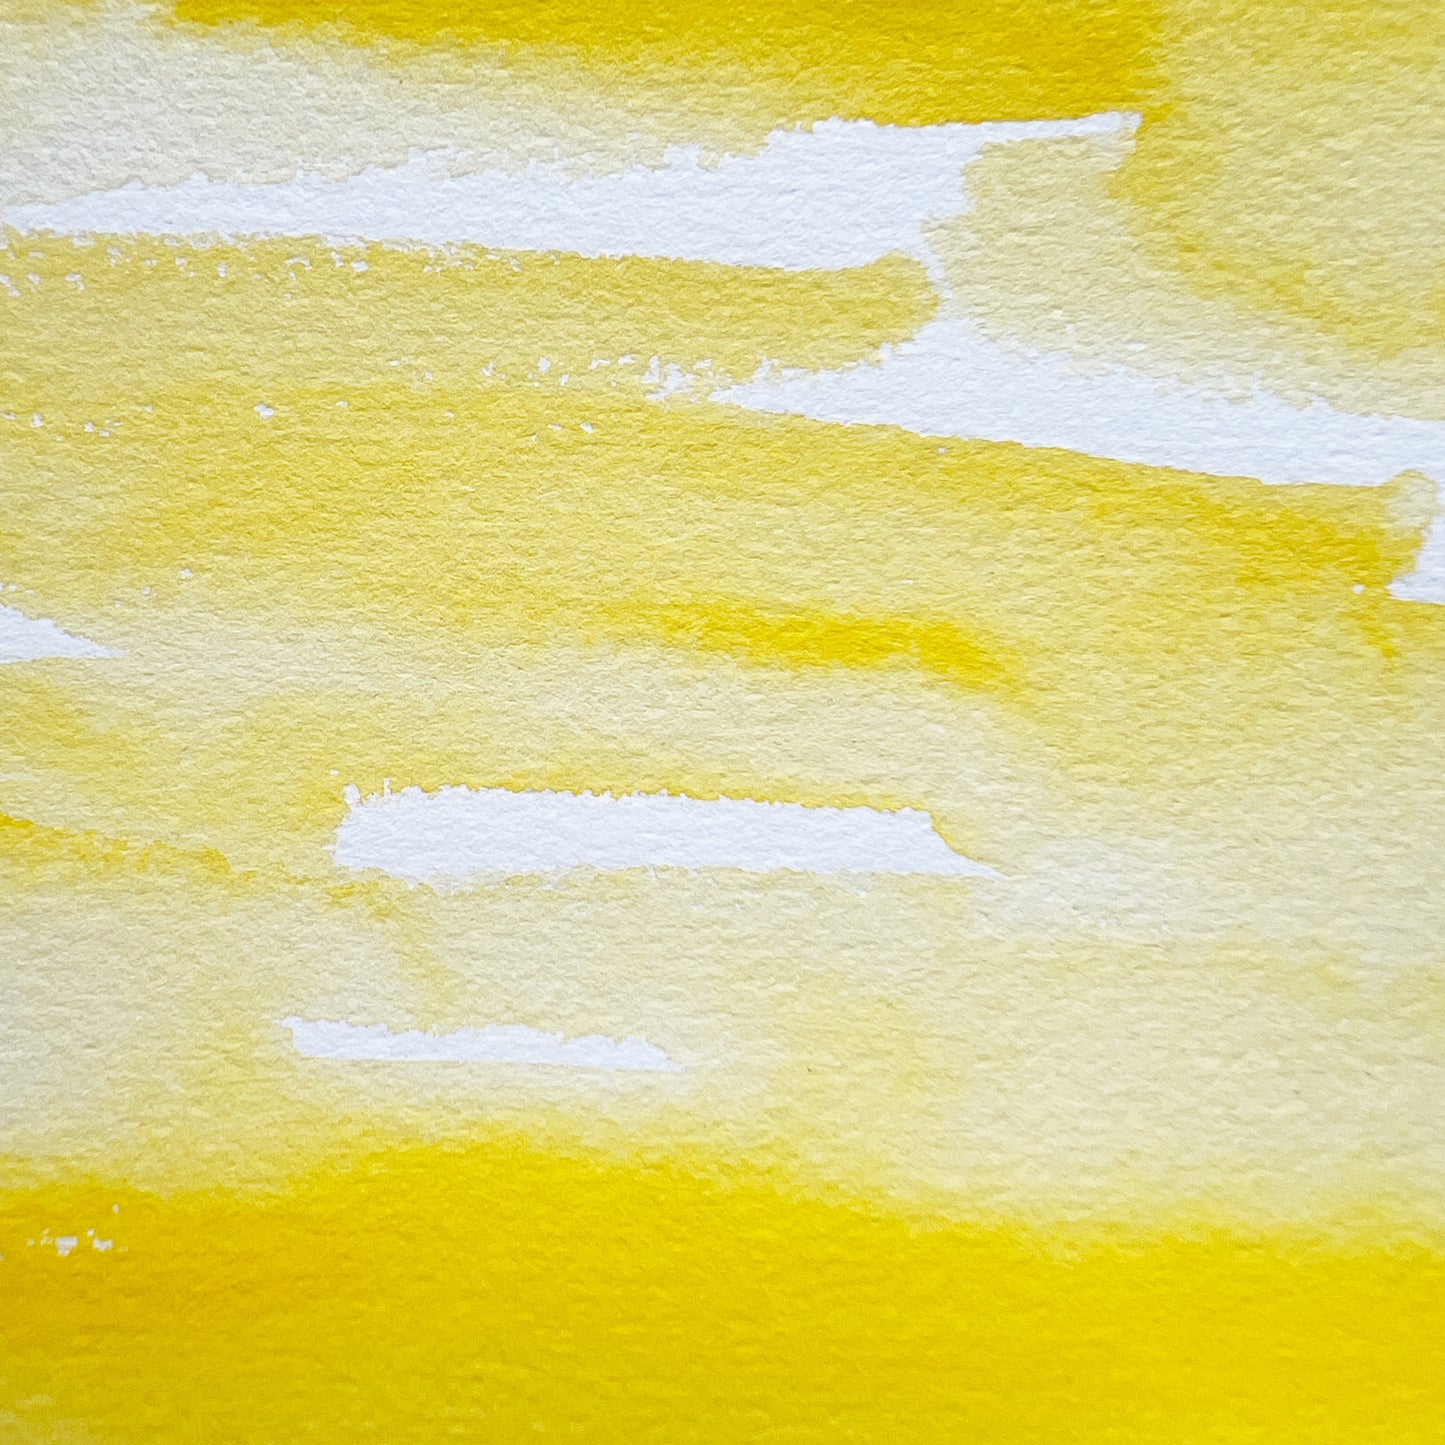 Primary Yellow. Half pan or bottle cap of handmade watercolor paint